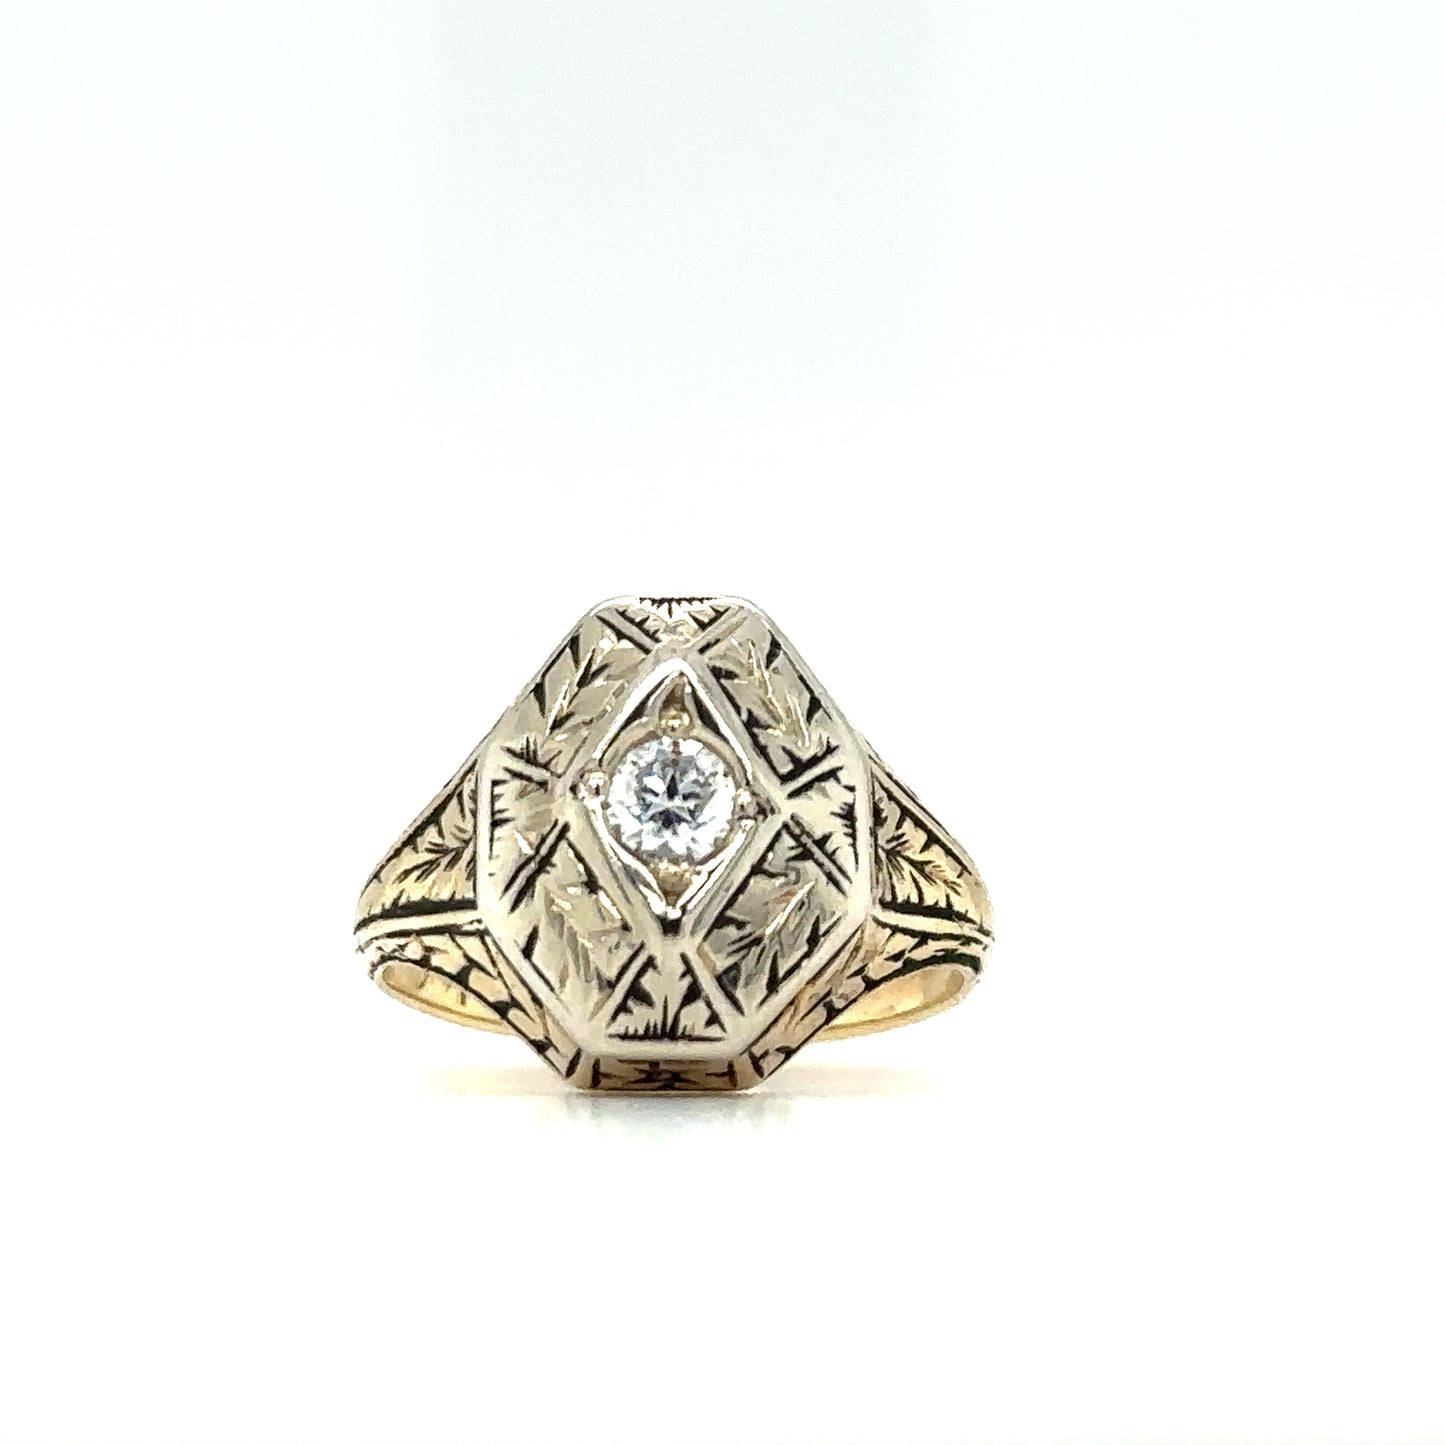 Circa 1920s Art Deco Geometric Diamond Ring in 14K White Gold